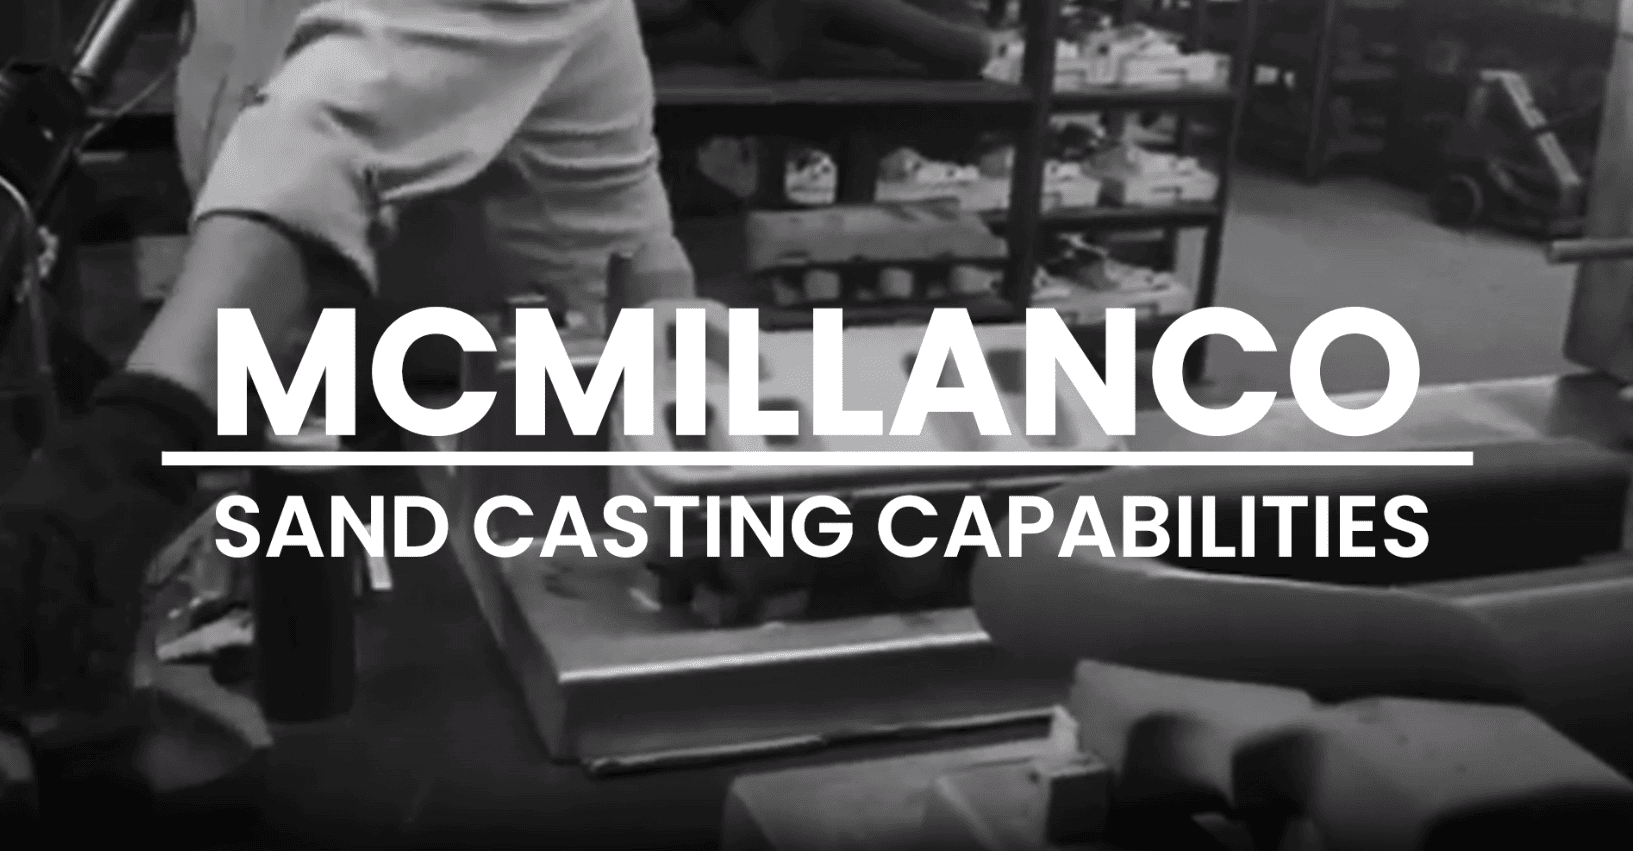 MCMILLANCO Sand Casting Capabilities